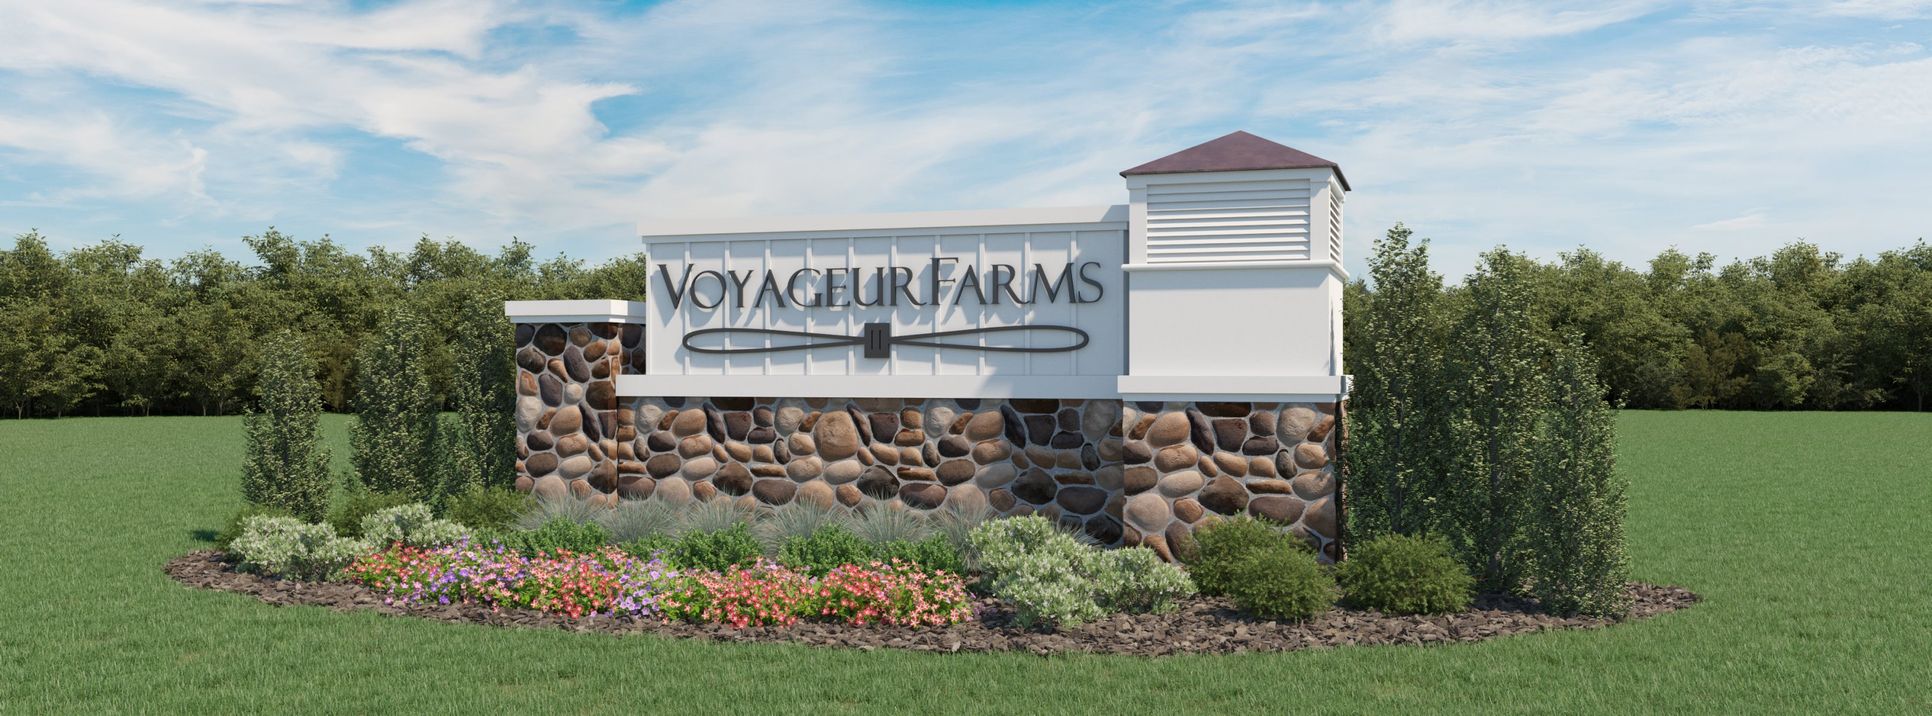 Voyageur Farms,55044